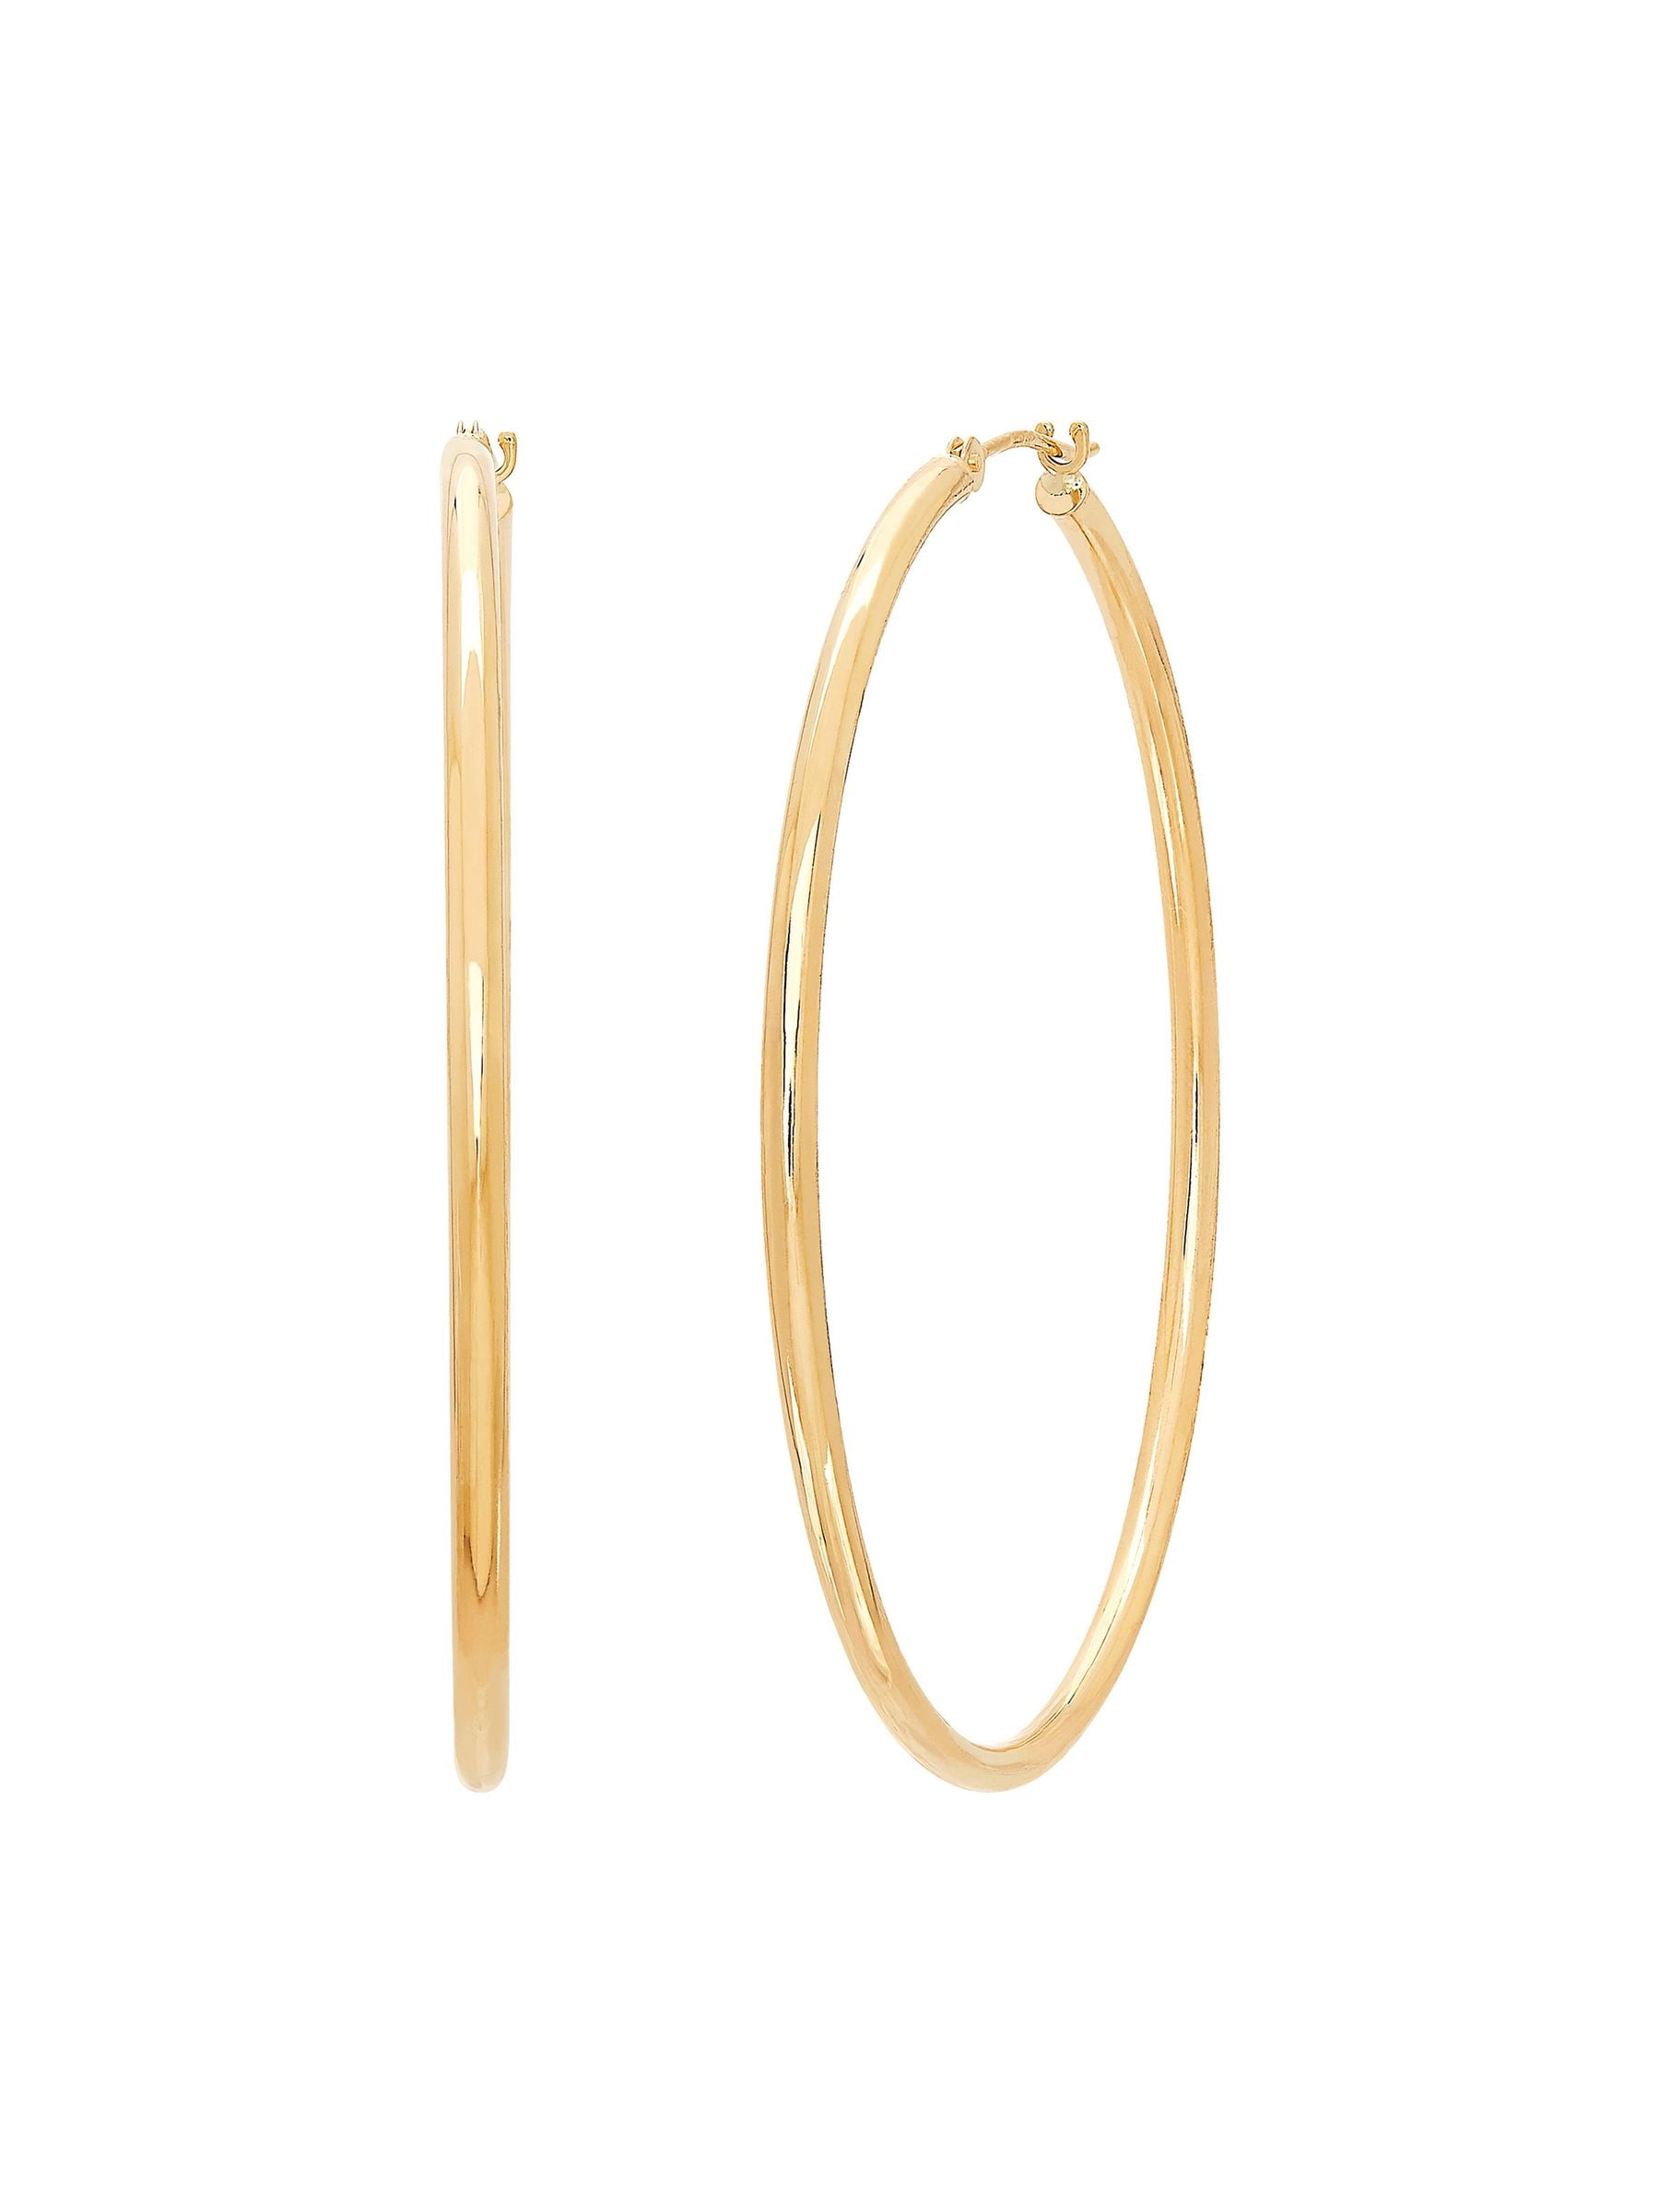 Finecraft 50 mm Round Tube Hoop Earrings in 10K Yellow Gold 